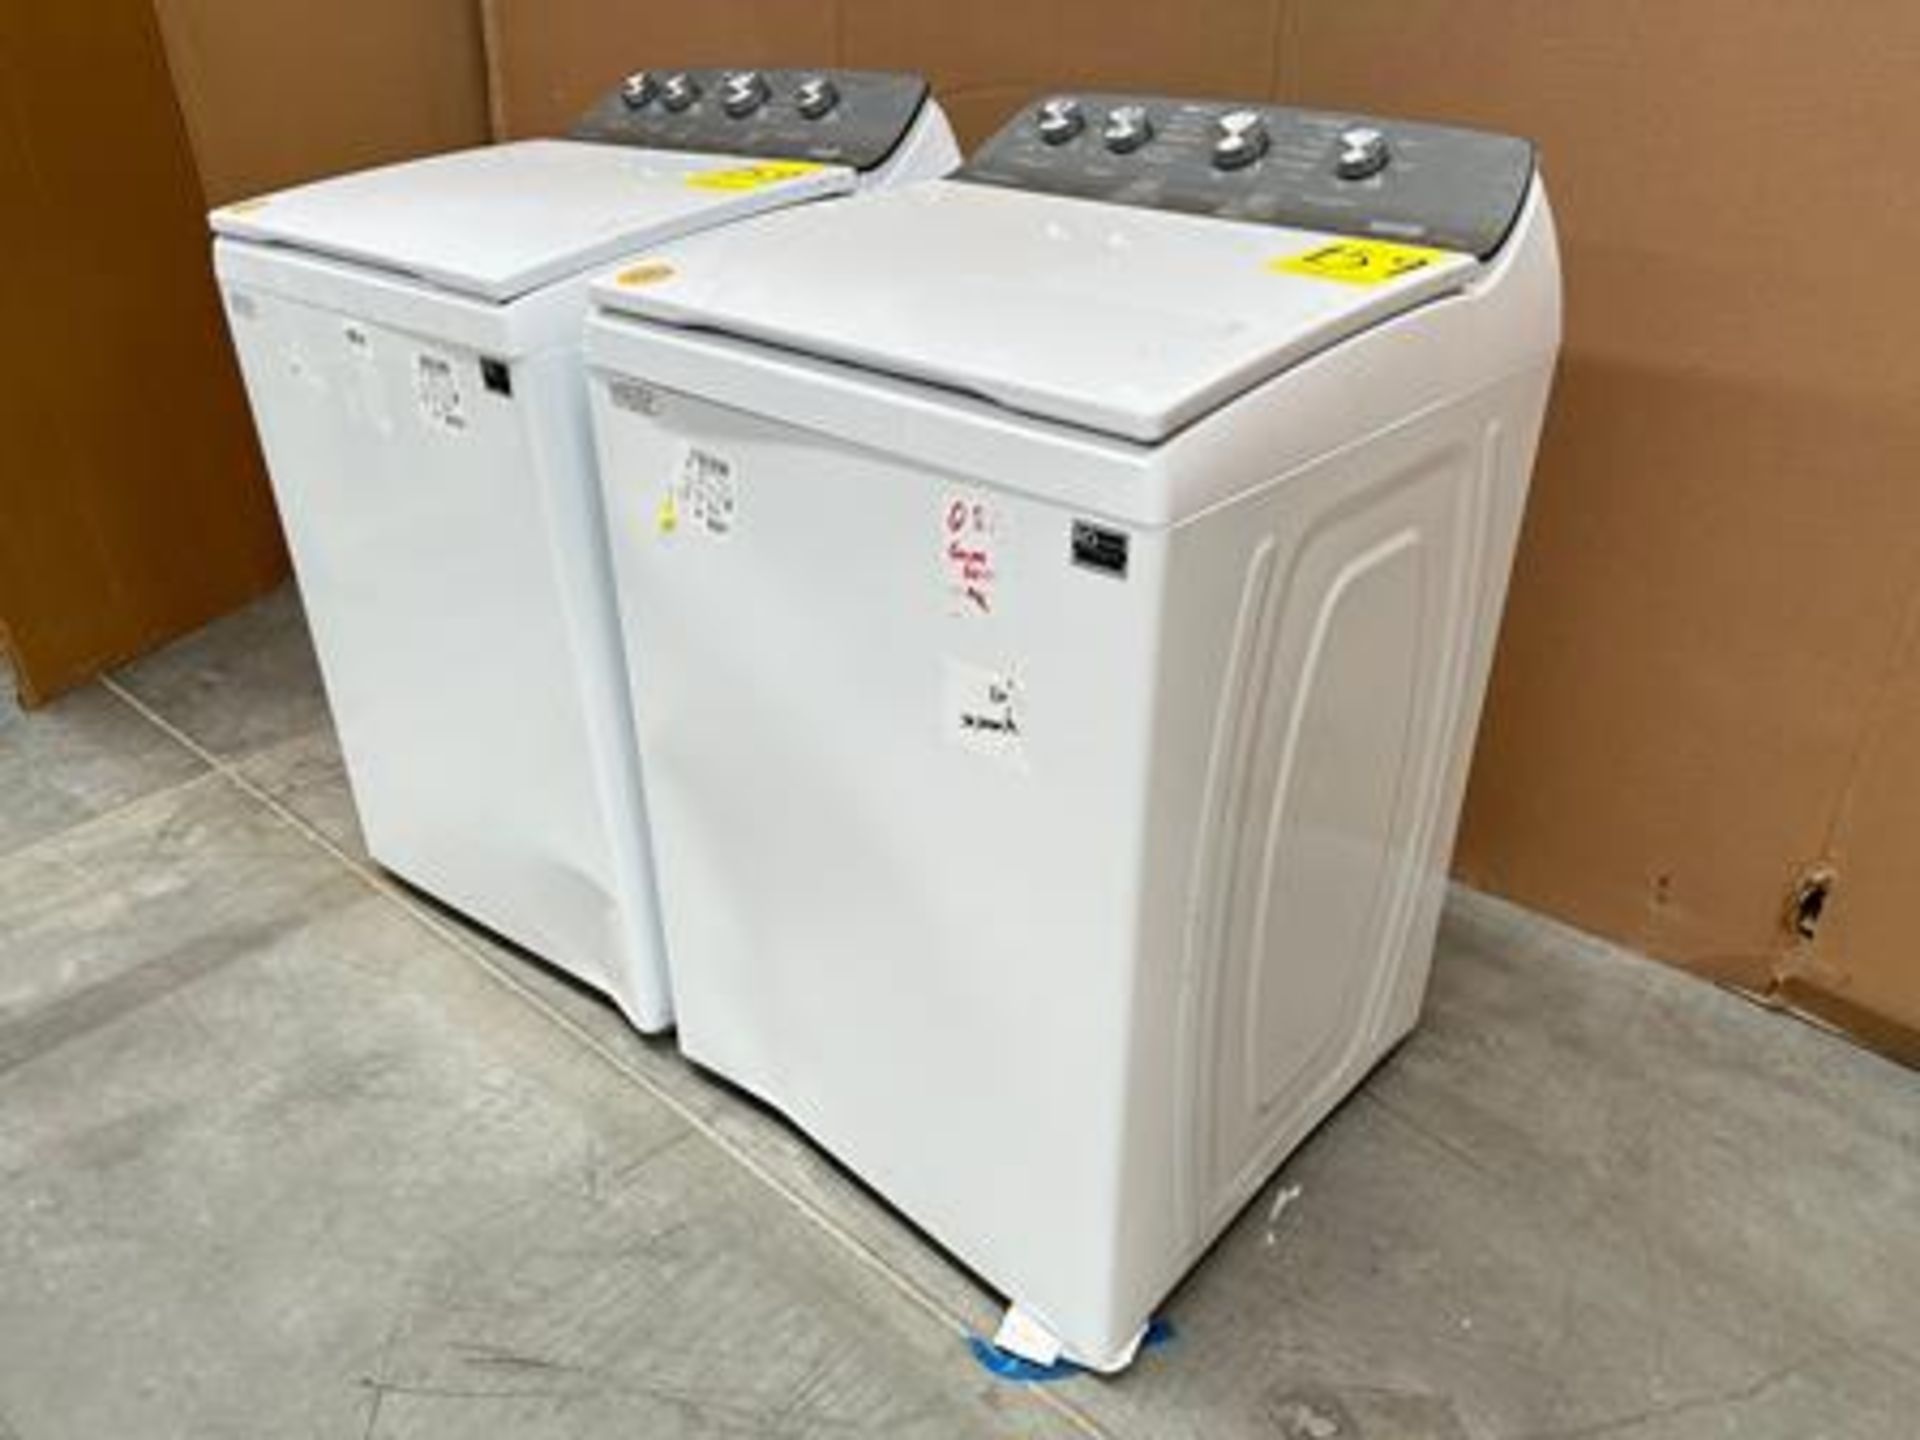 Lote de 2 lavadoras contiene: 1 lavadora de 22 kg marca Whirlpool, modelo 8MWTW2224MPM0, serie 7034 - Image 2 of 6